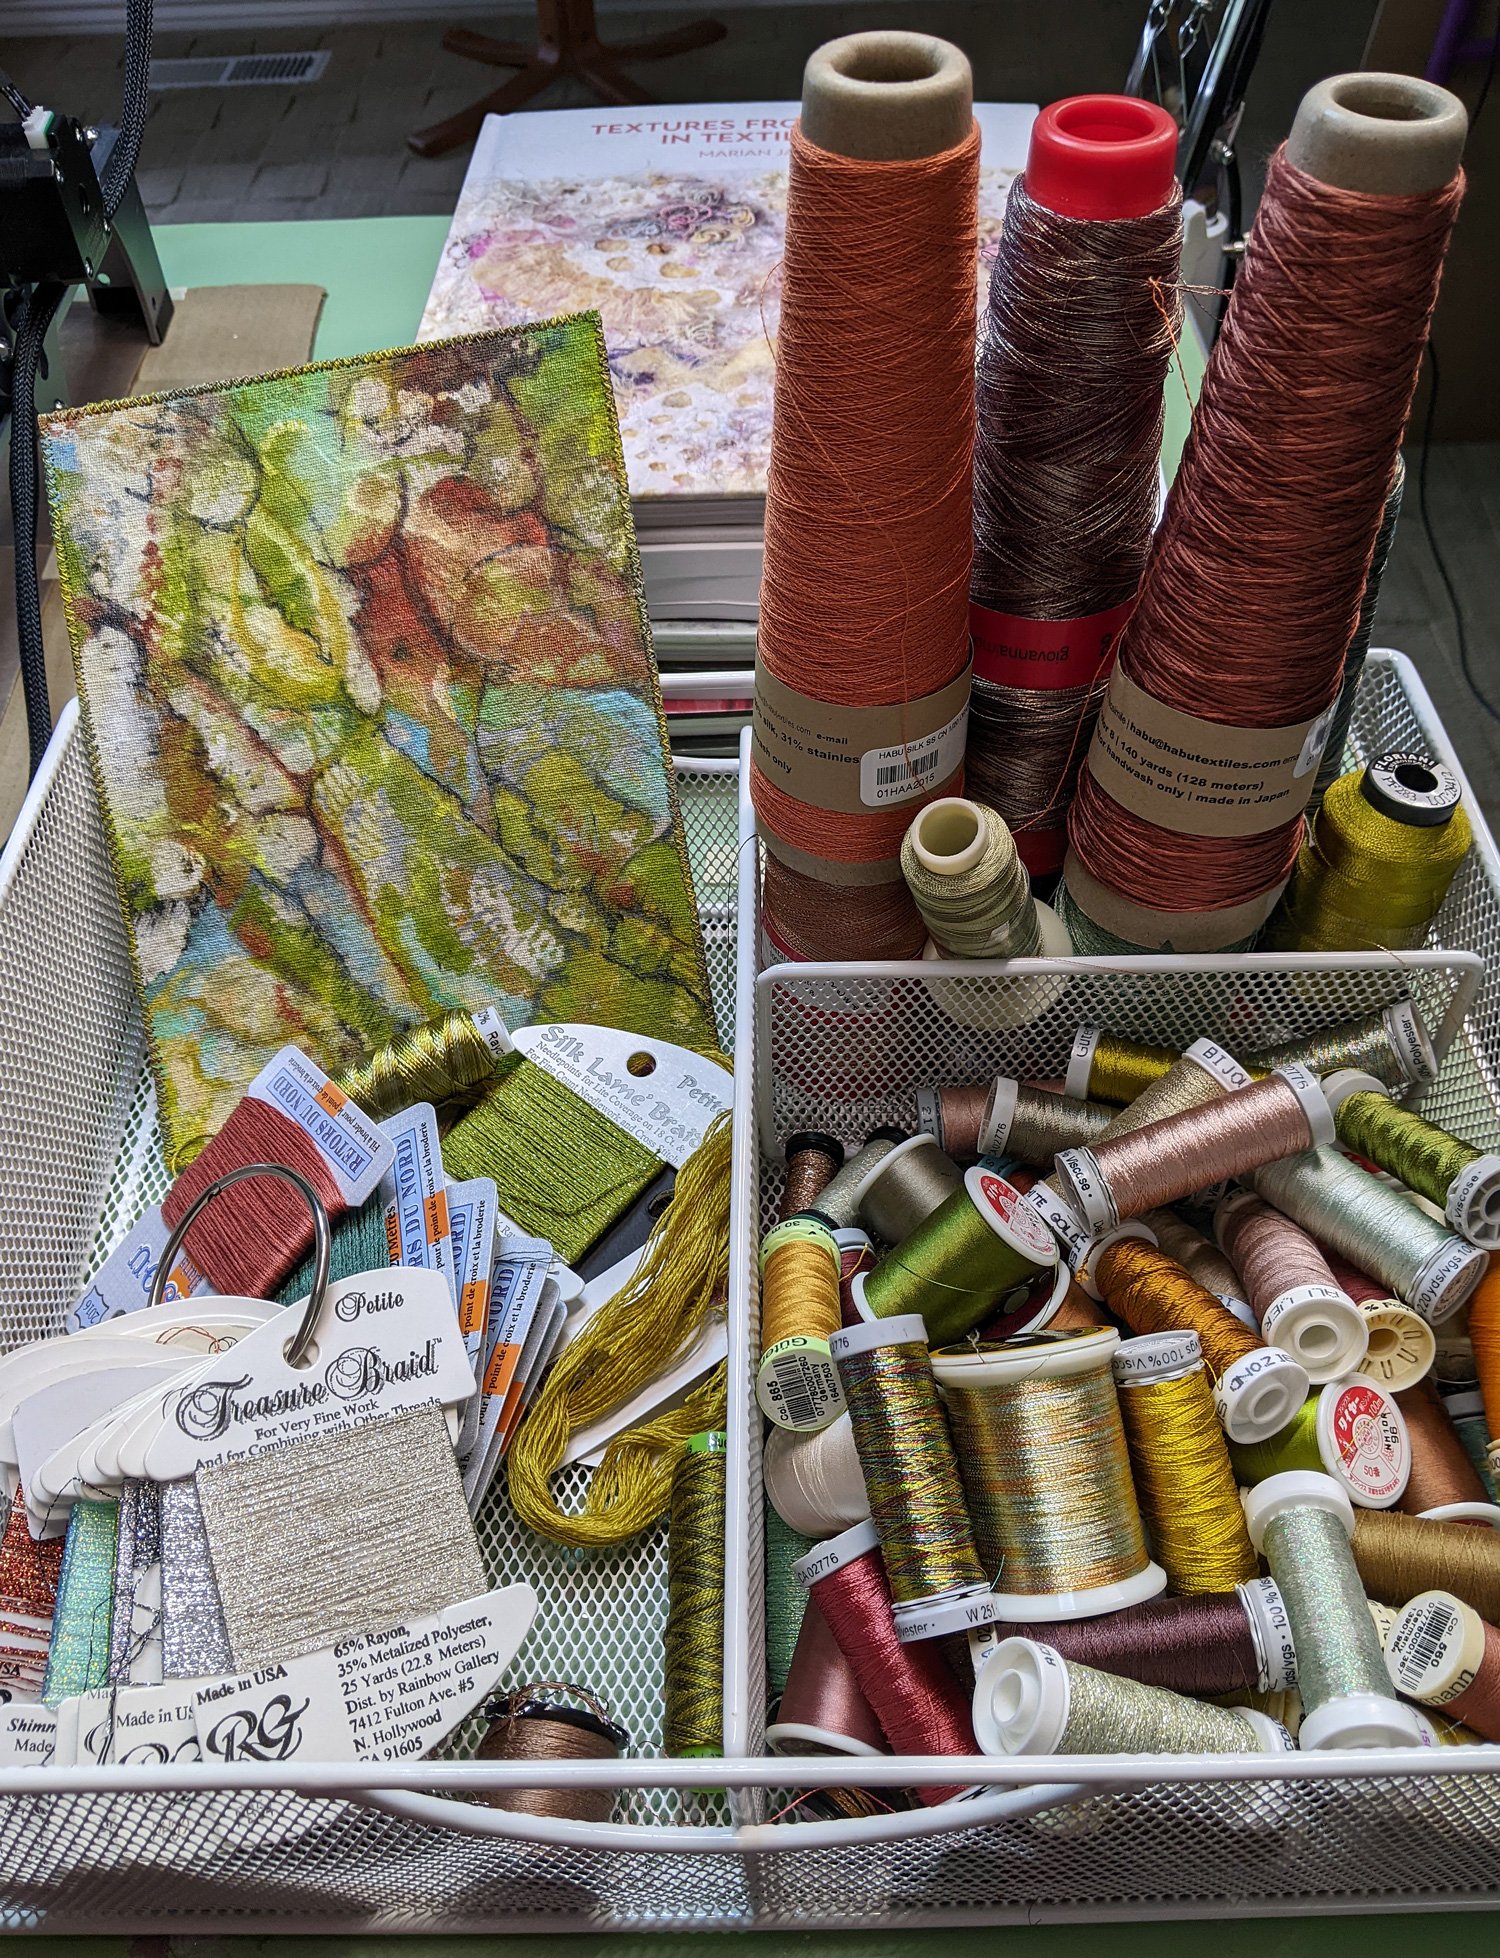 Simthread Anti-Tangle Embroidery Thread Kit with Organizer Box